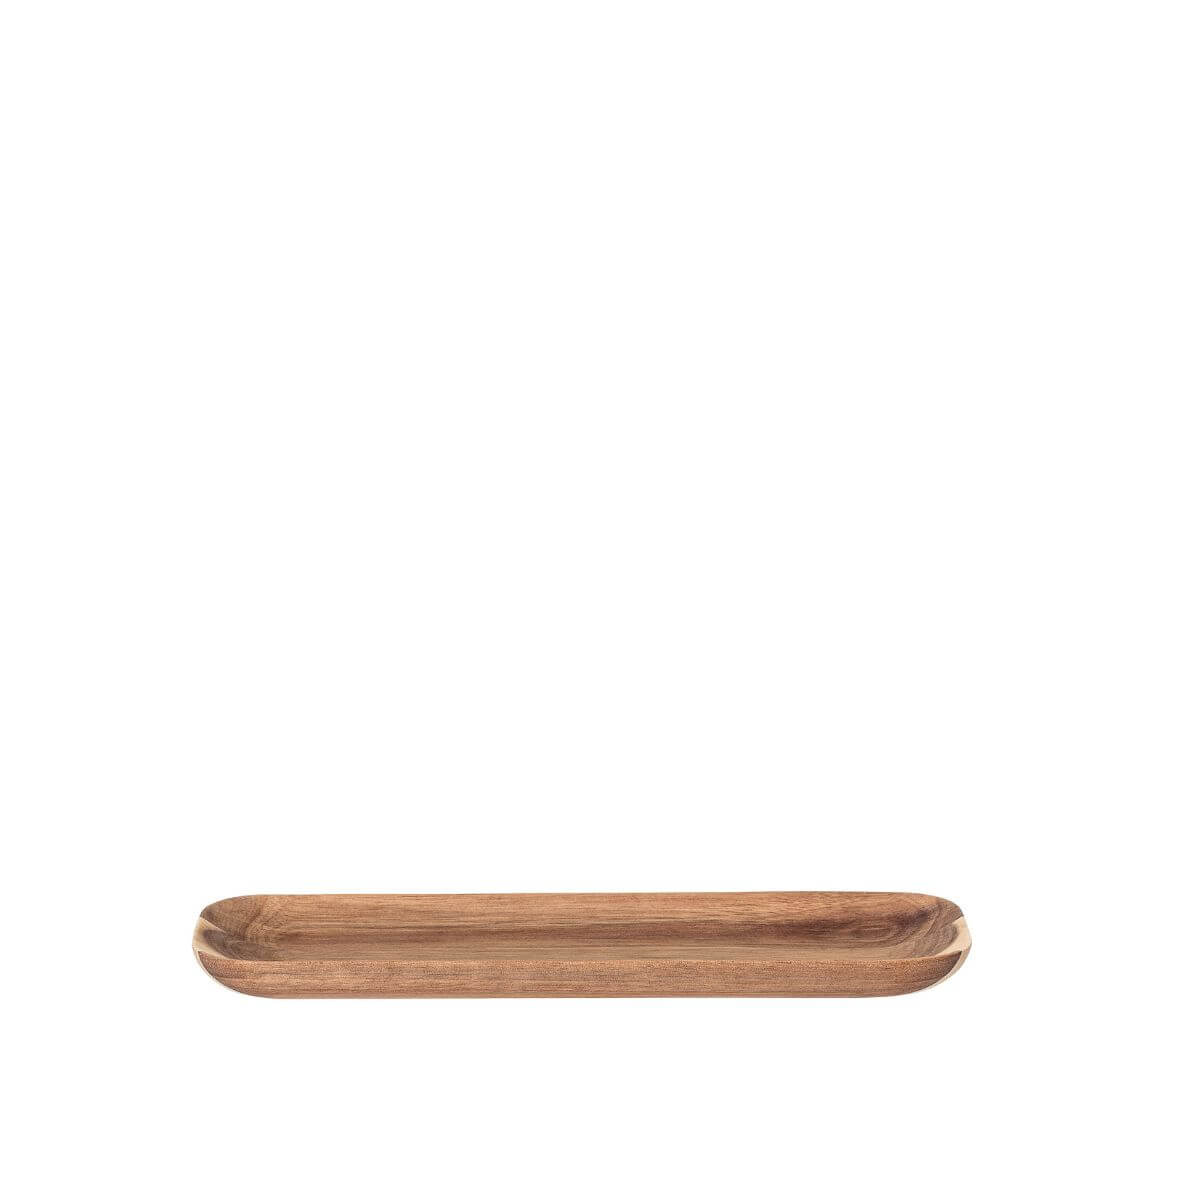 Tray in slim acia wood on white background